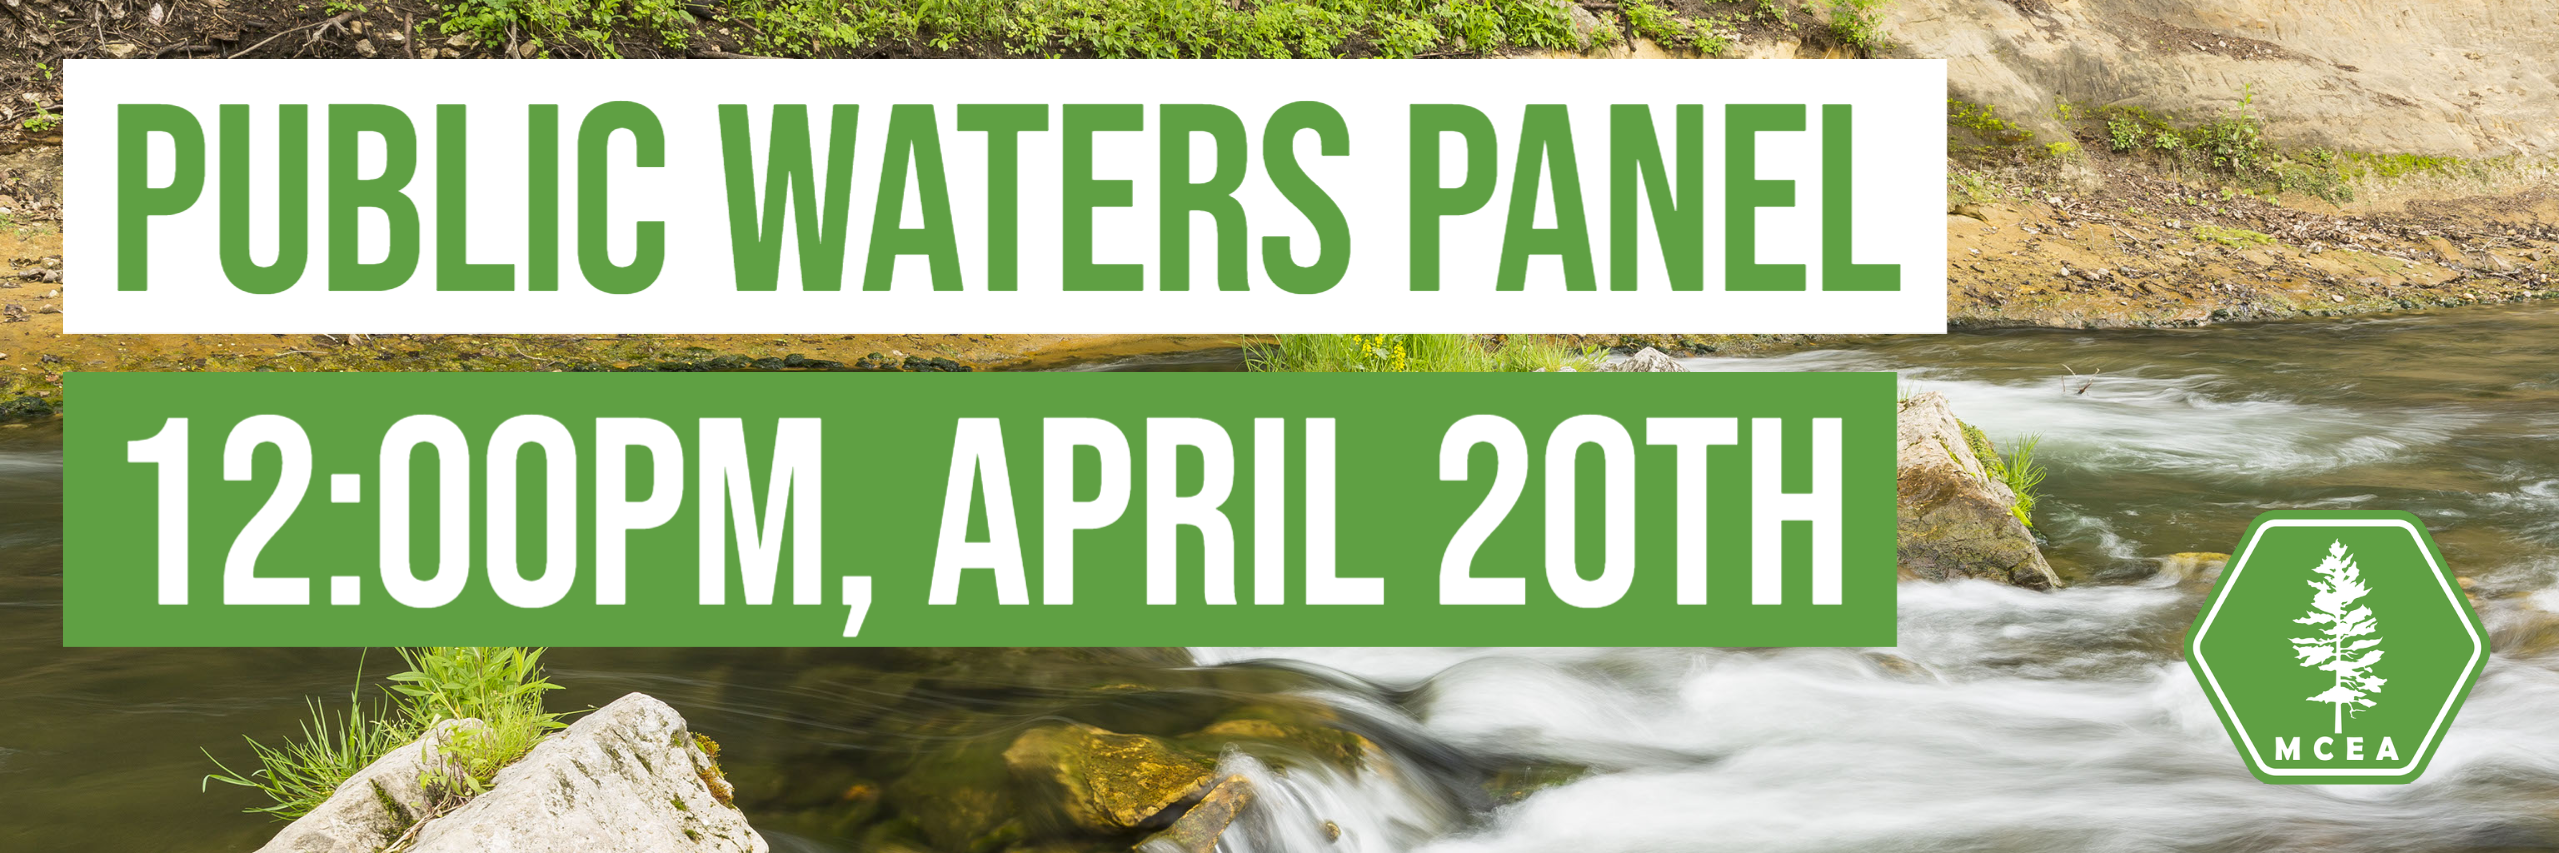 Public Waters Panel 12:00pm April 20th